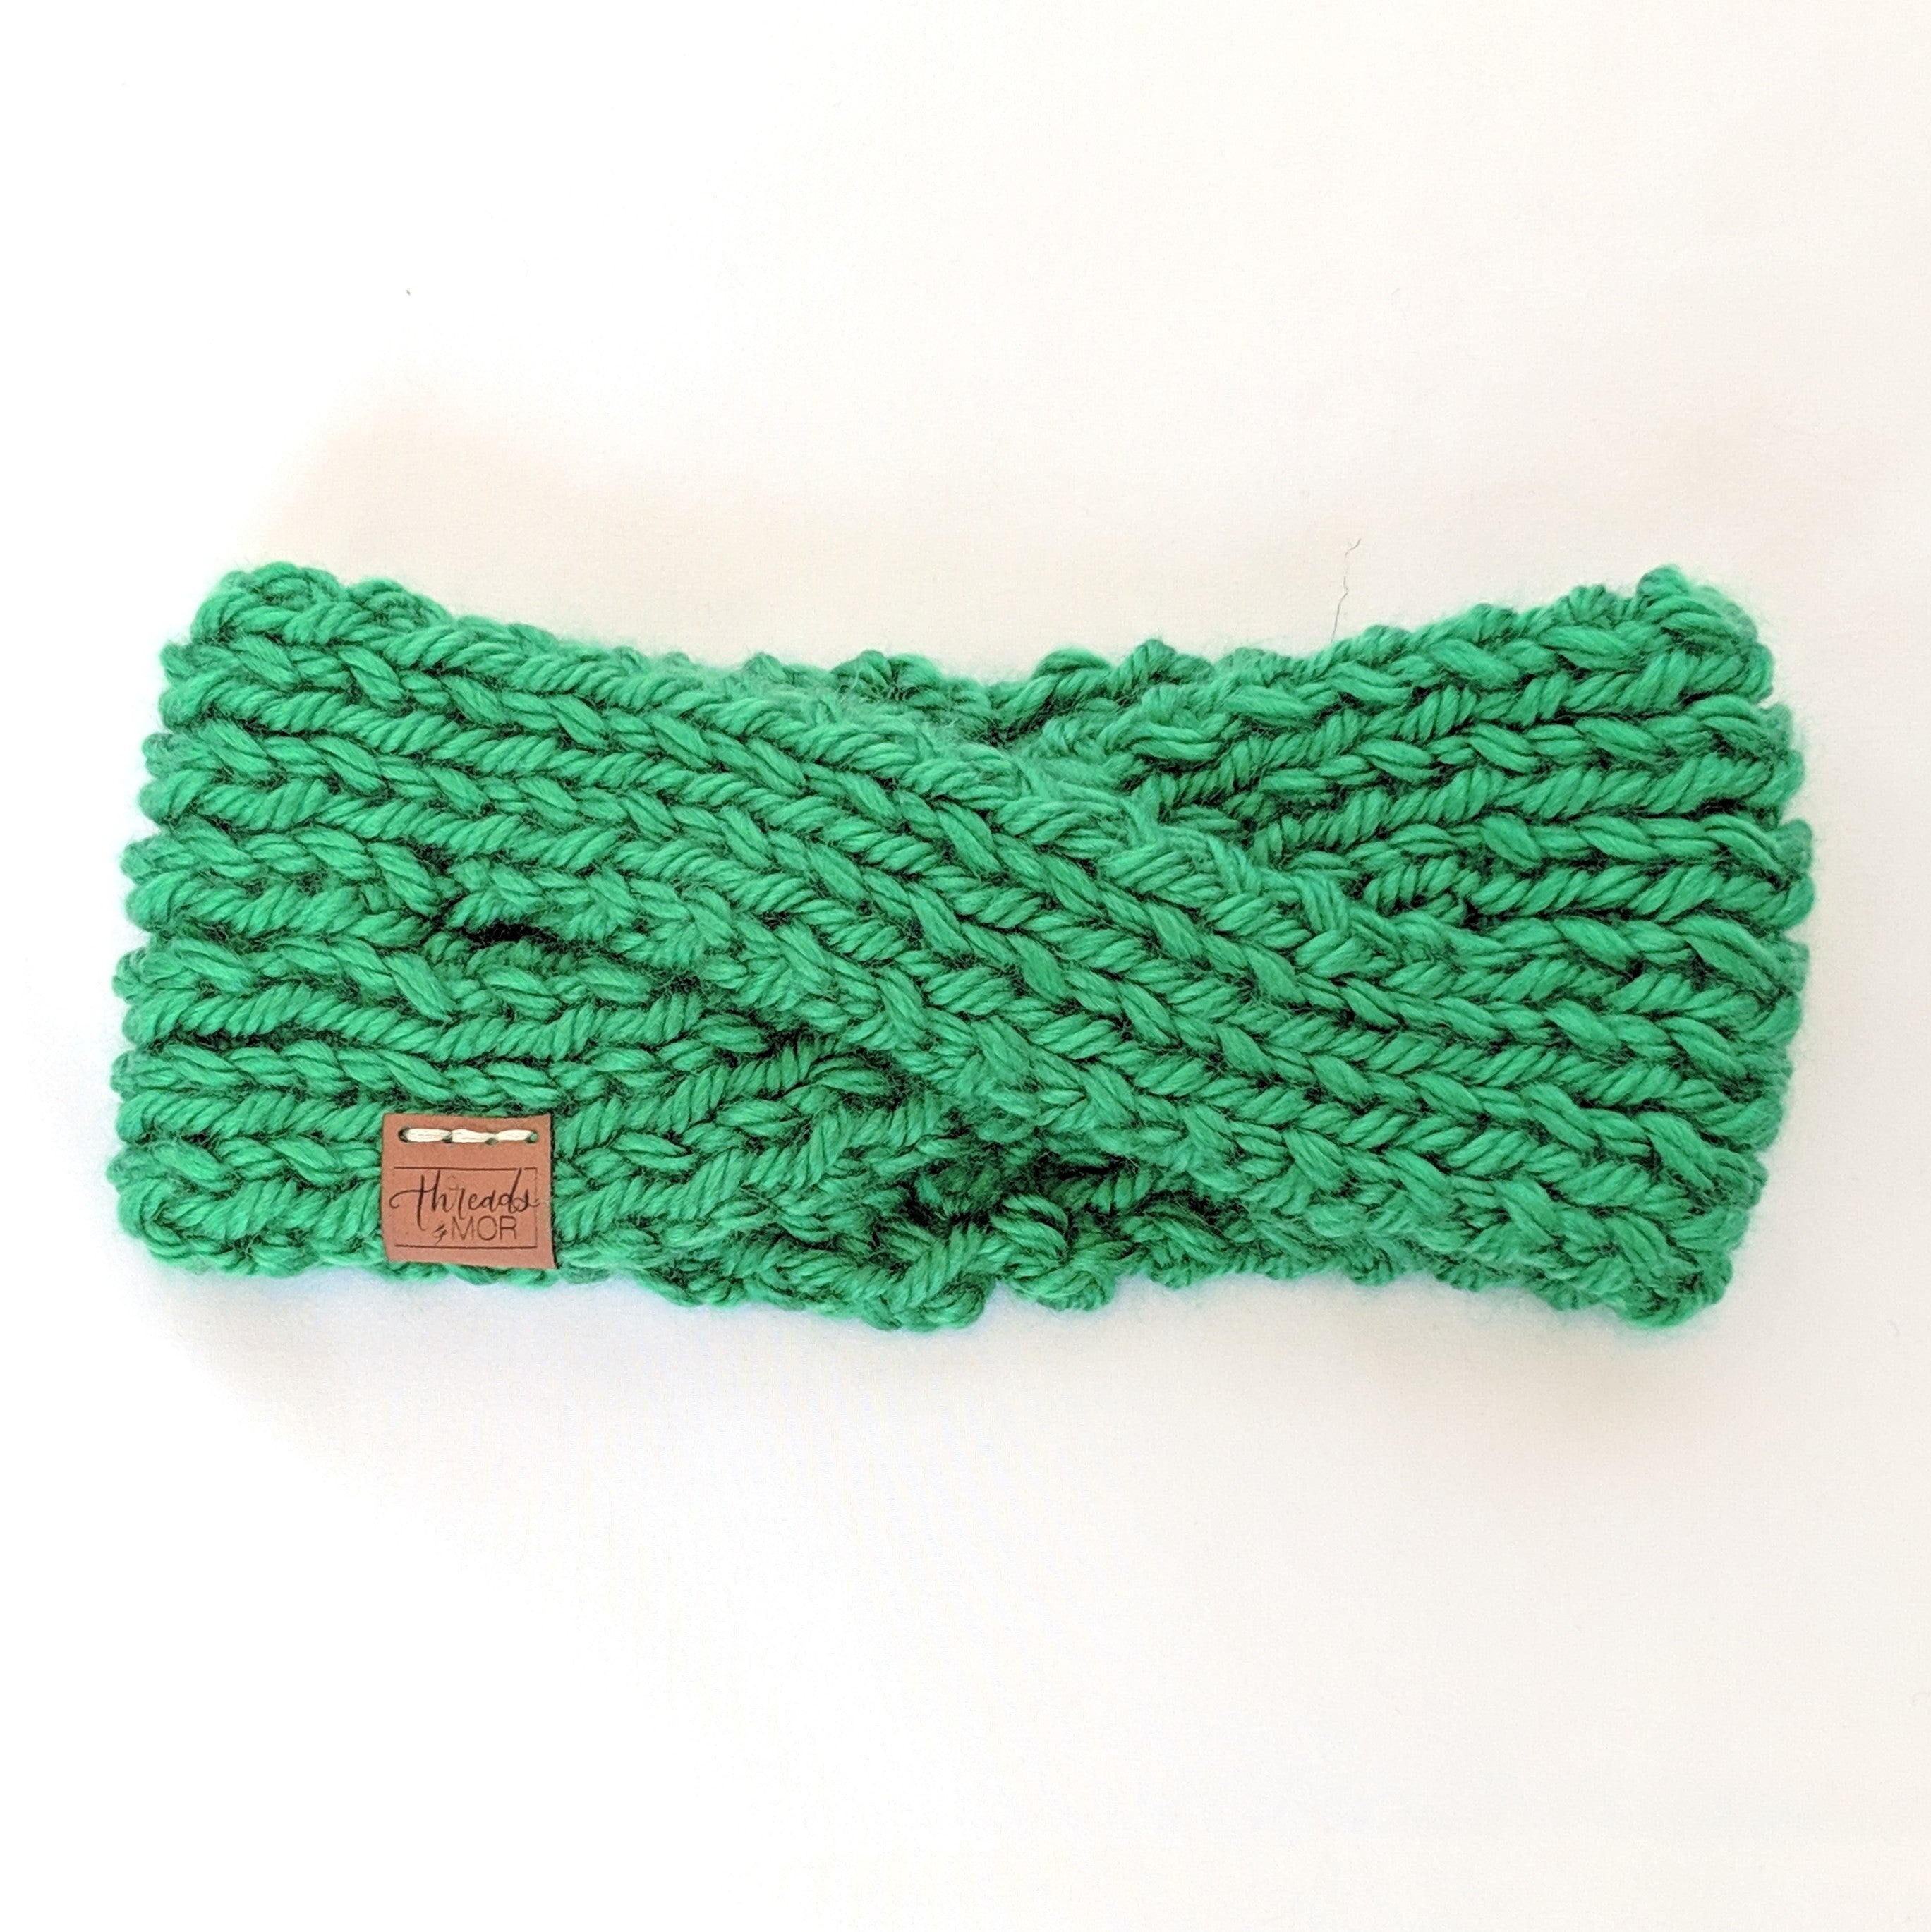 Kelly Green twist knit headband and ear warmer